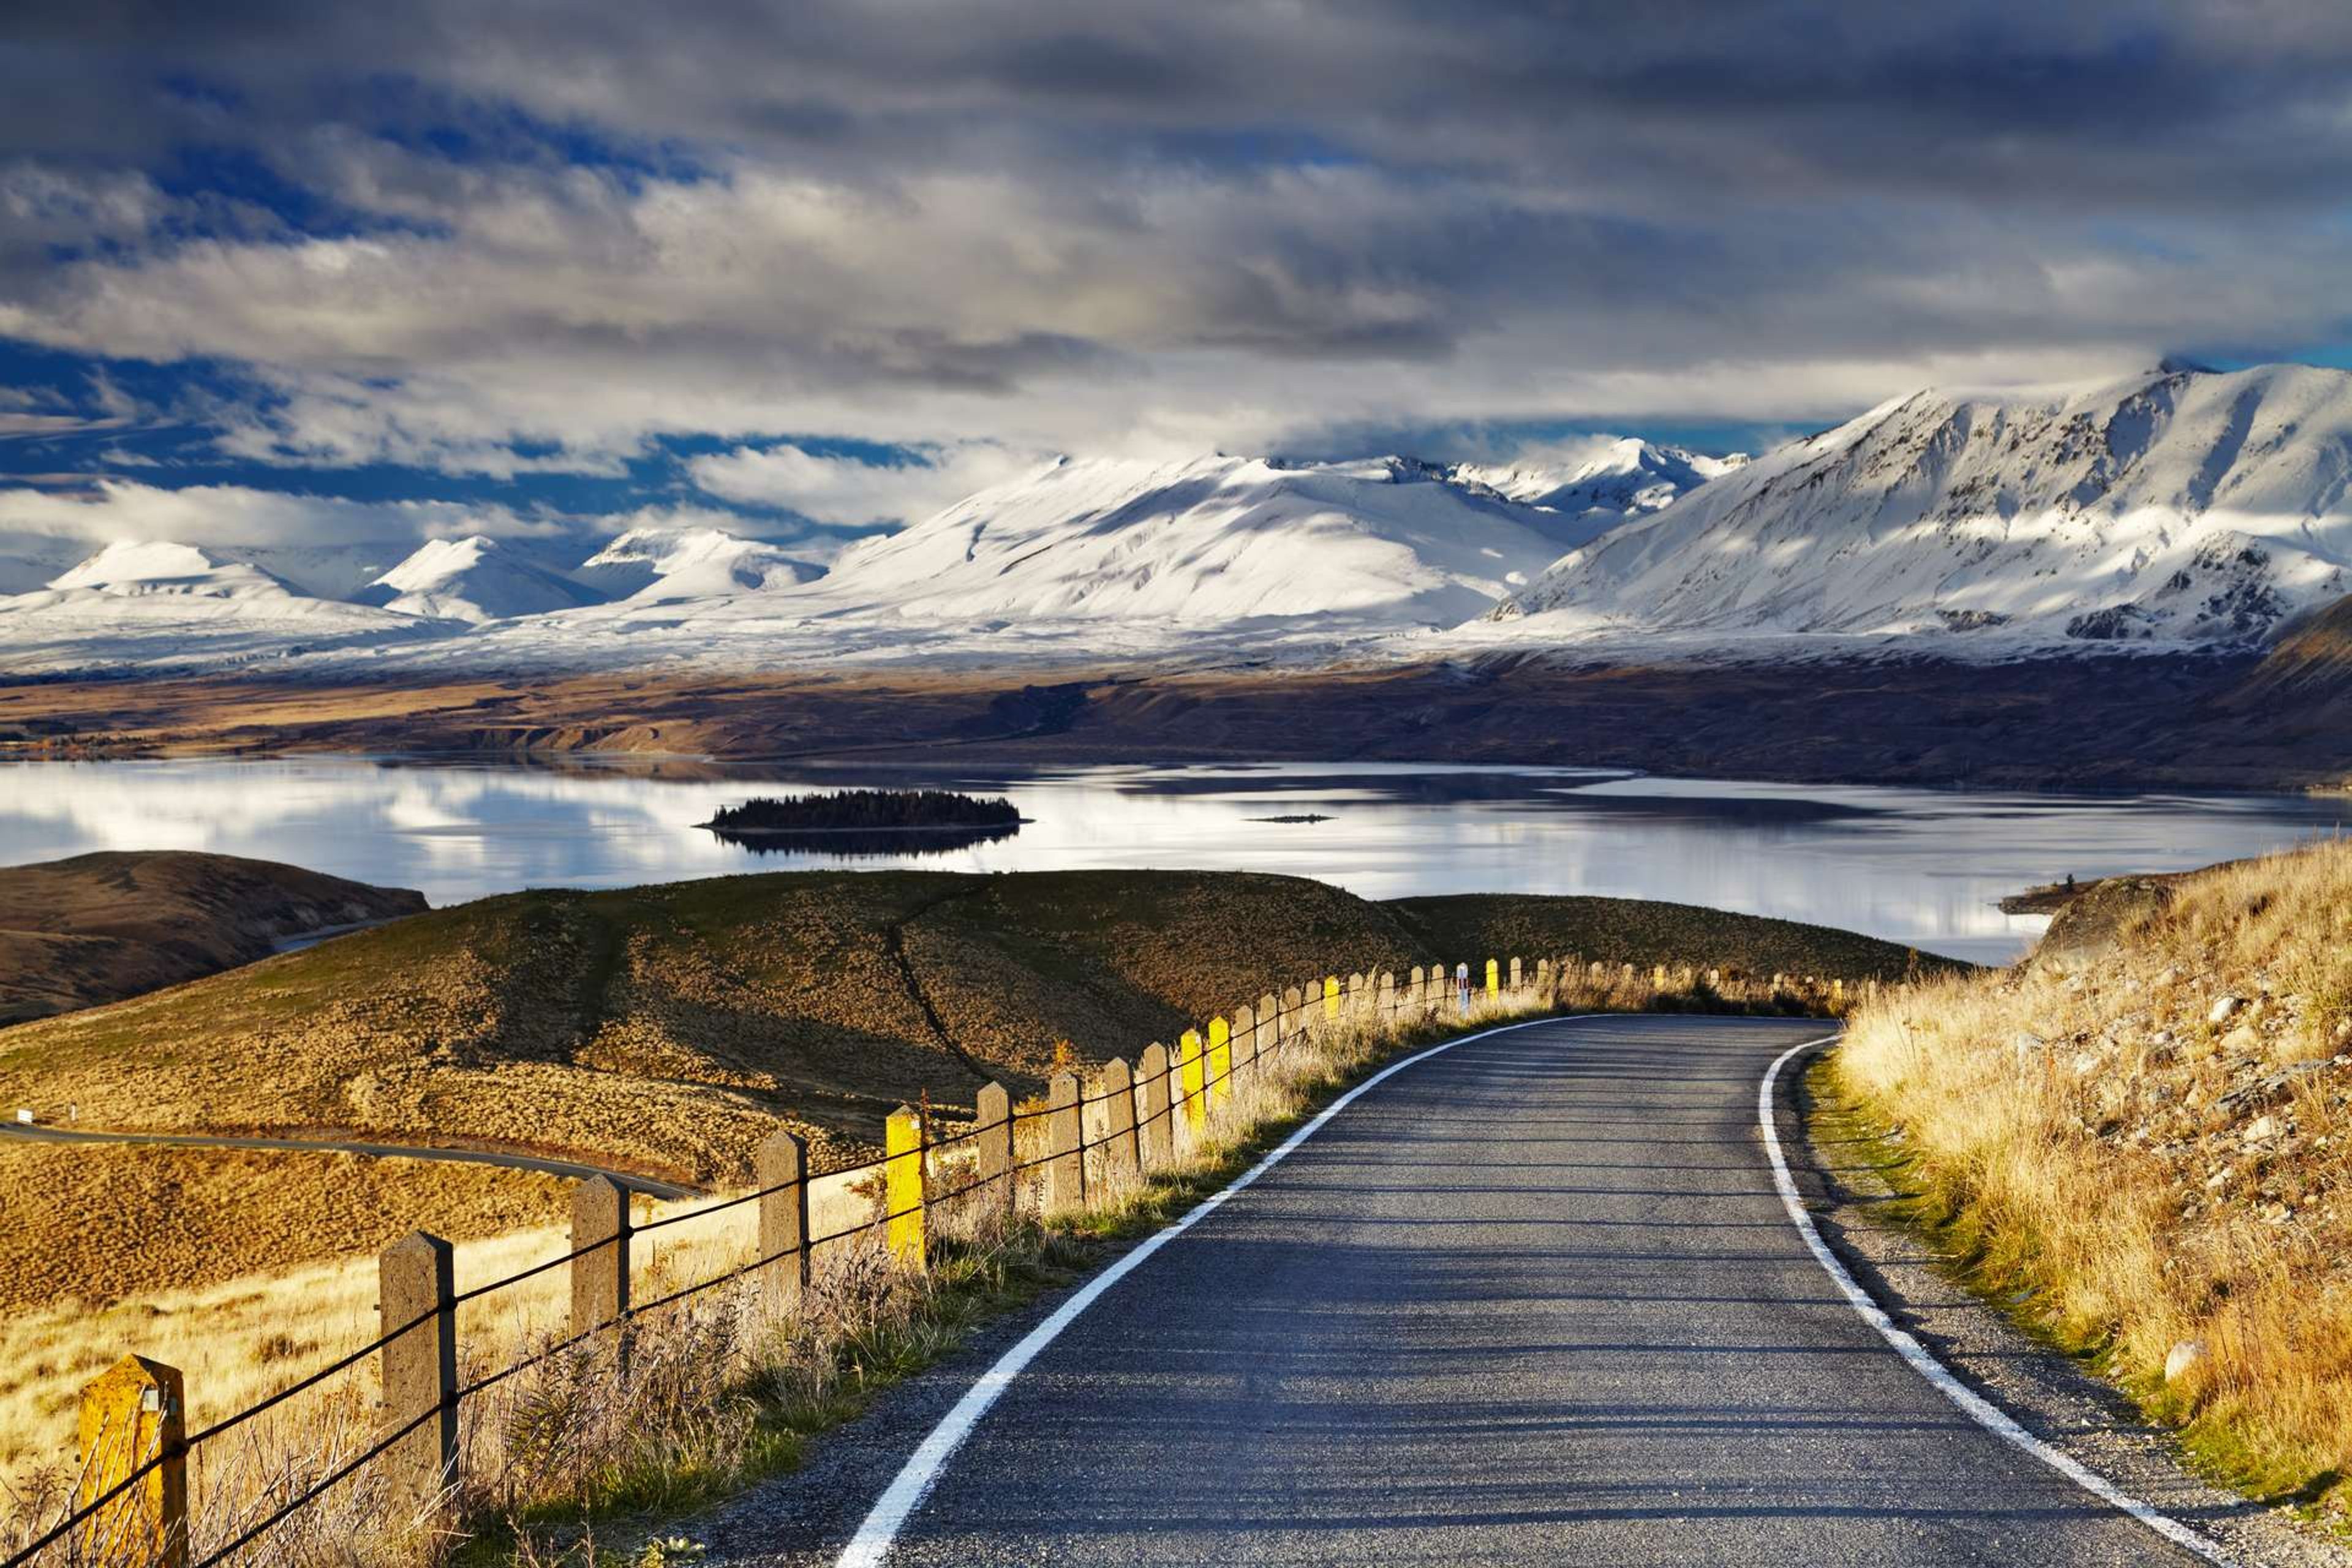 Nieuw Zeeland Southern Alps and Lake Tekapo, view from Mount John, Mackenzie Country